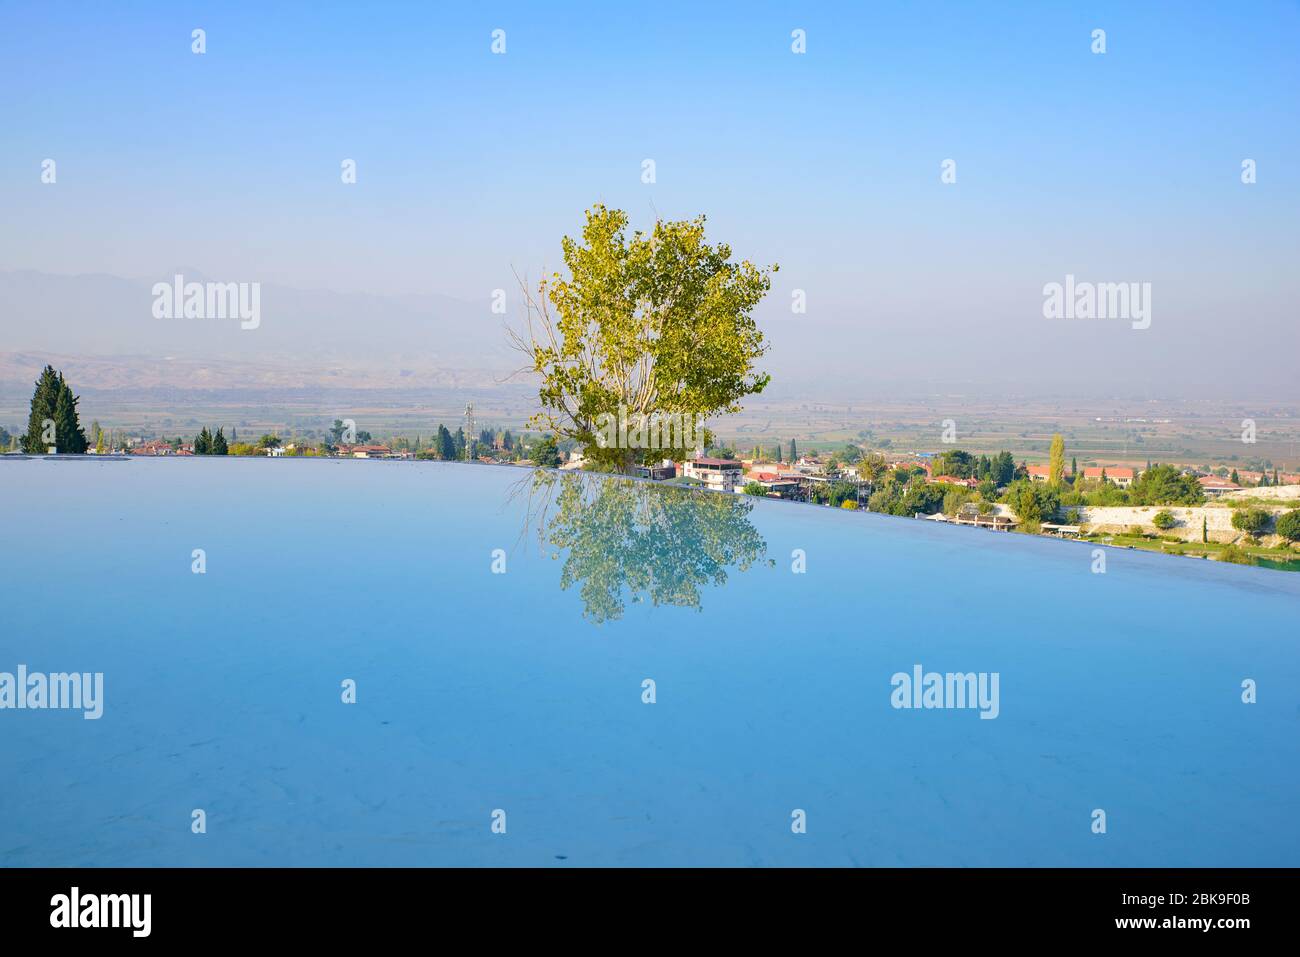 A tree and reflection on the pool at Pamukkale (cotton castle), Denizli, Turkey Stock Photo